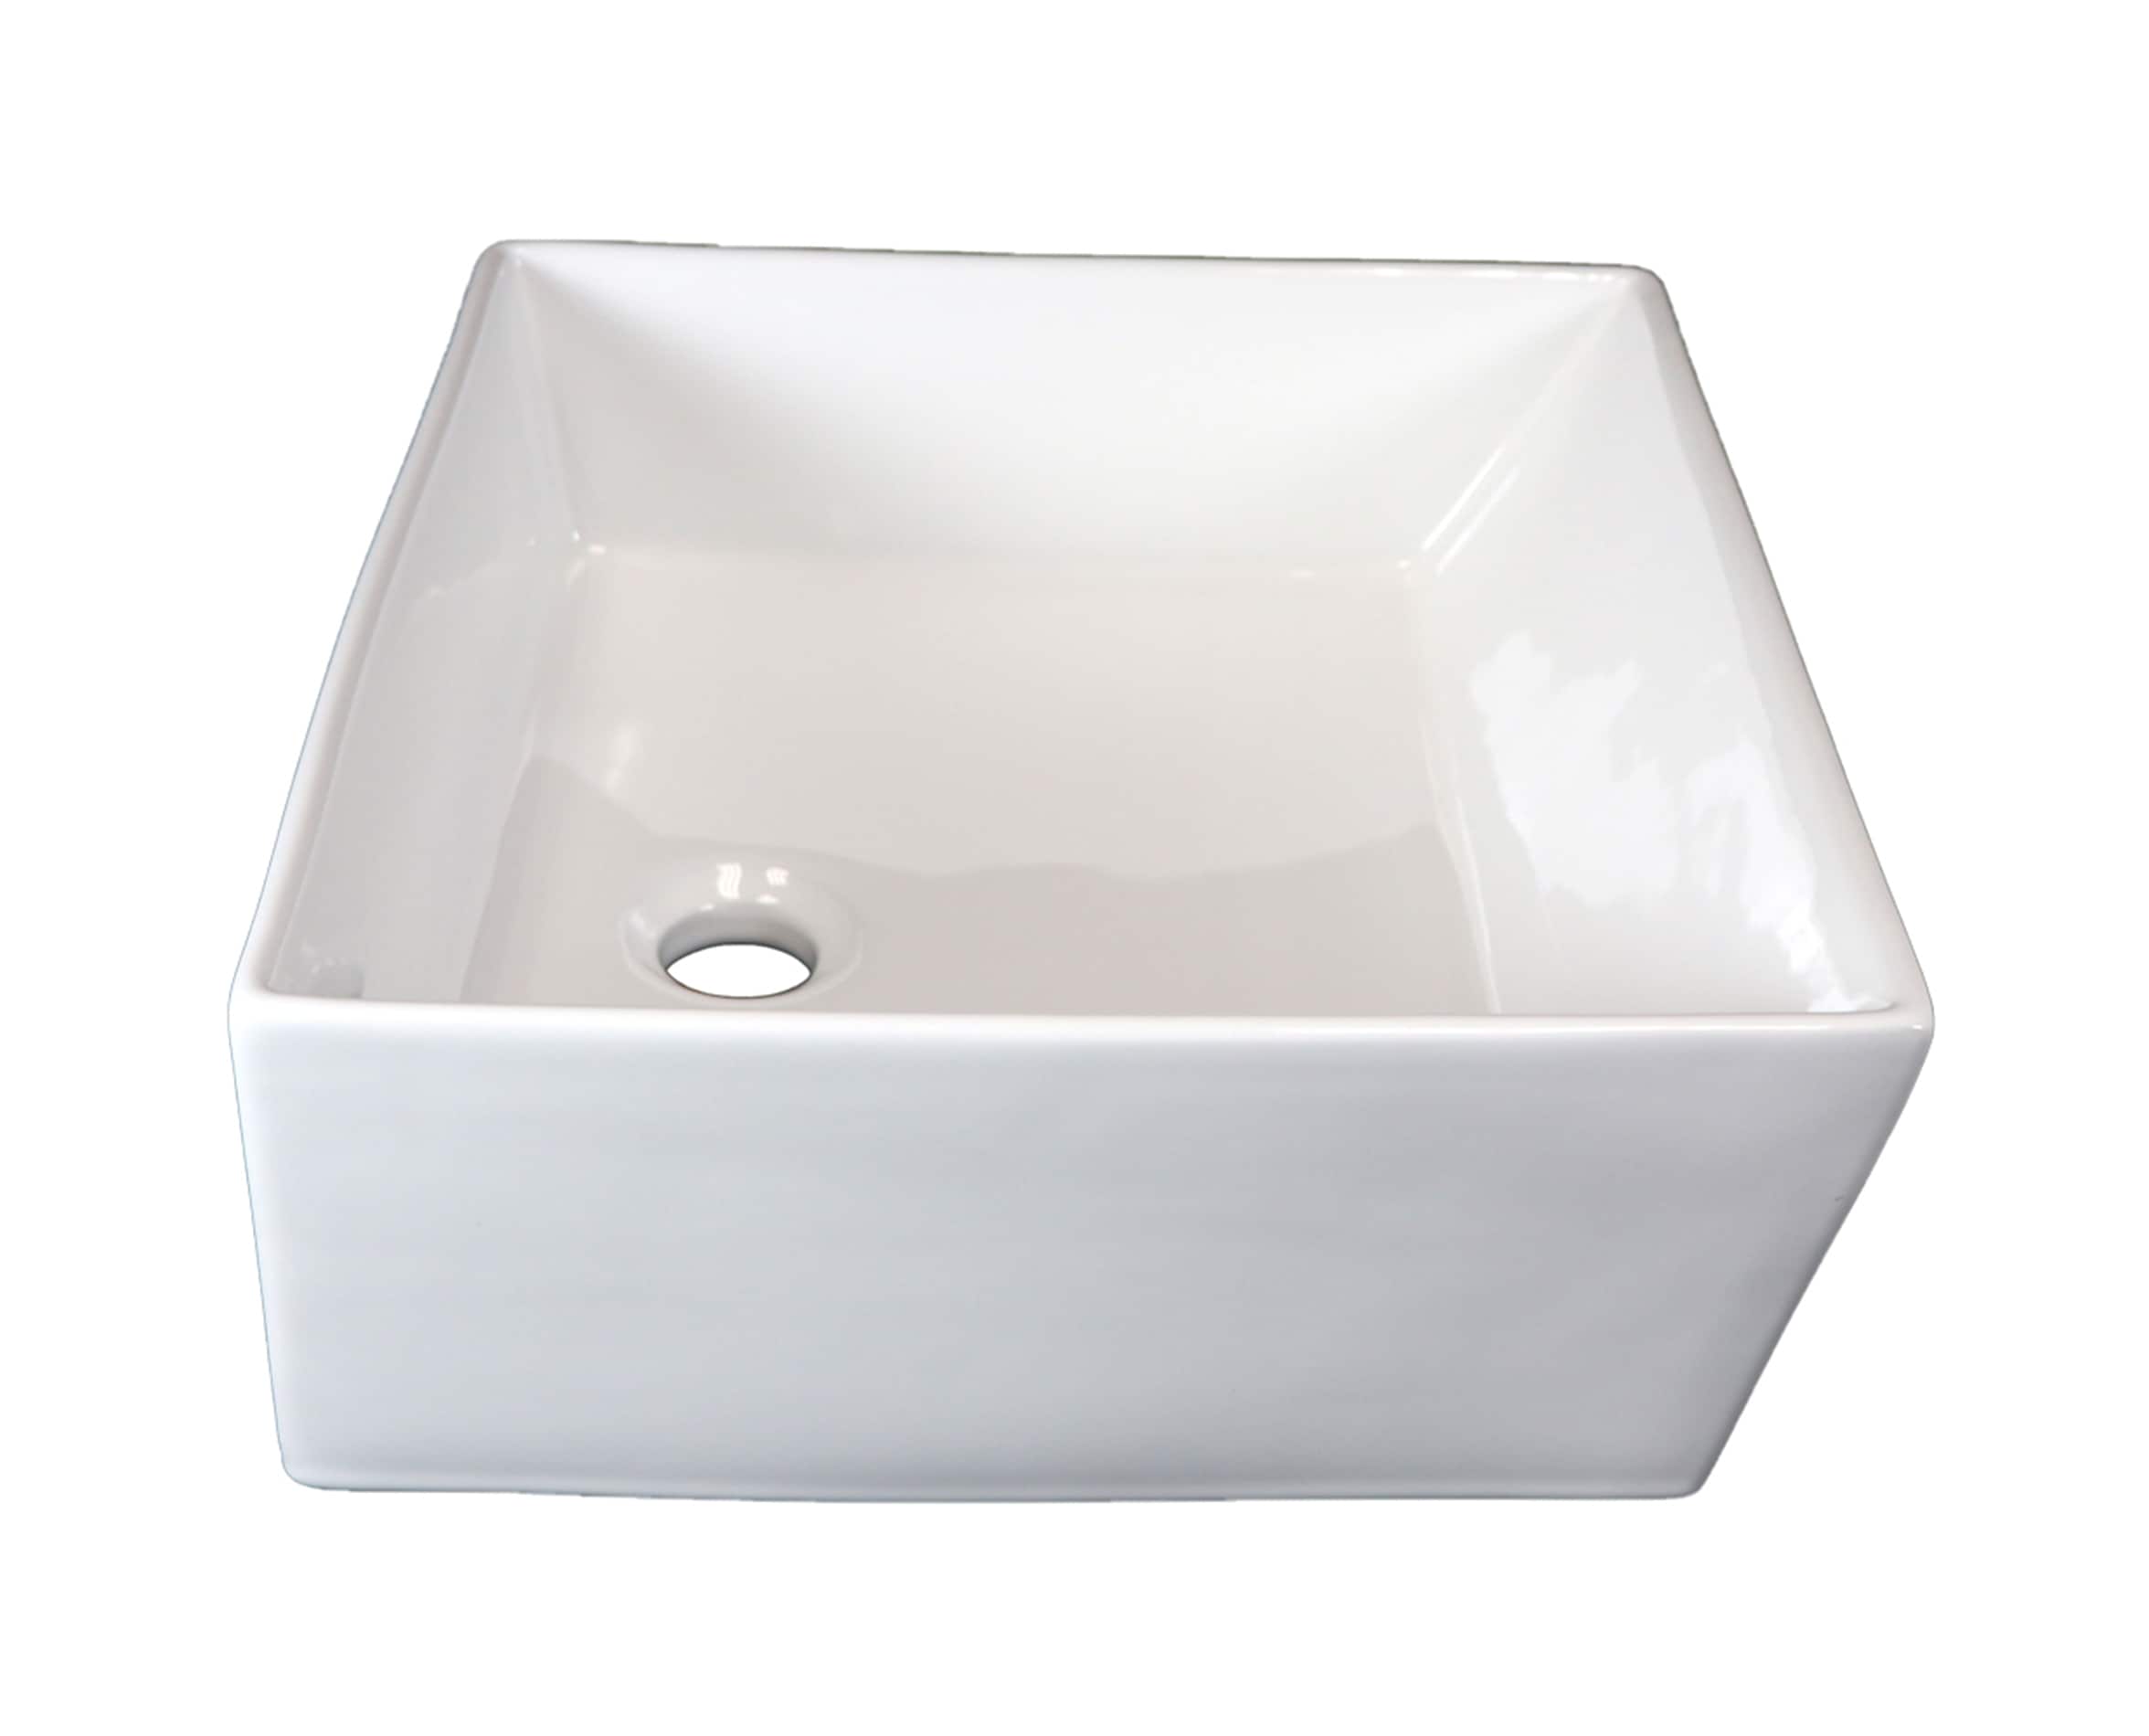 Stalwart 11.325 in. x 17.75 in. x 15.325 in. White Plastic Sink